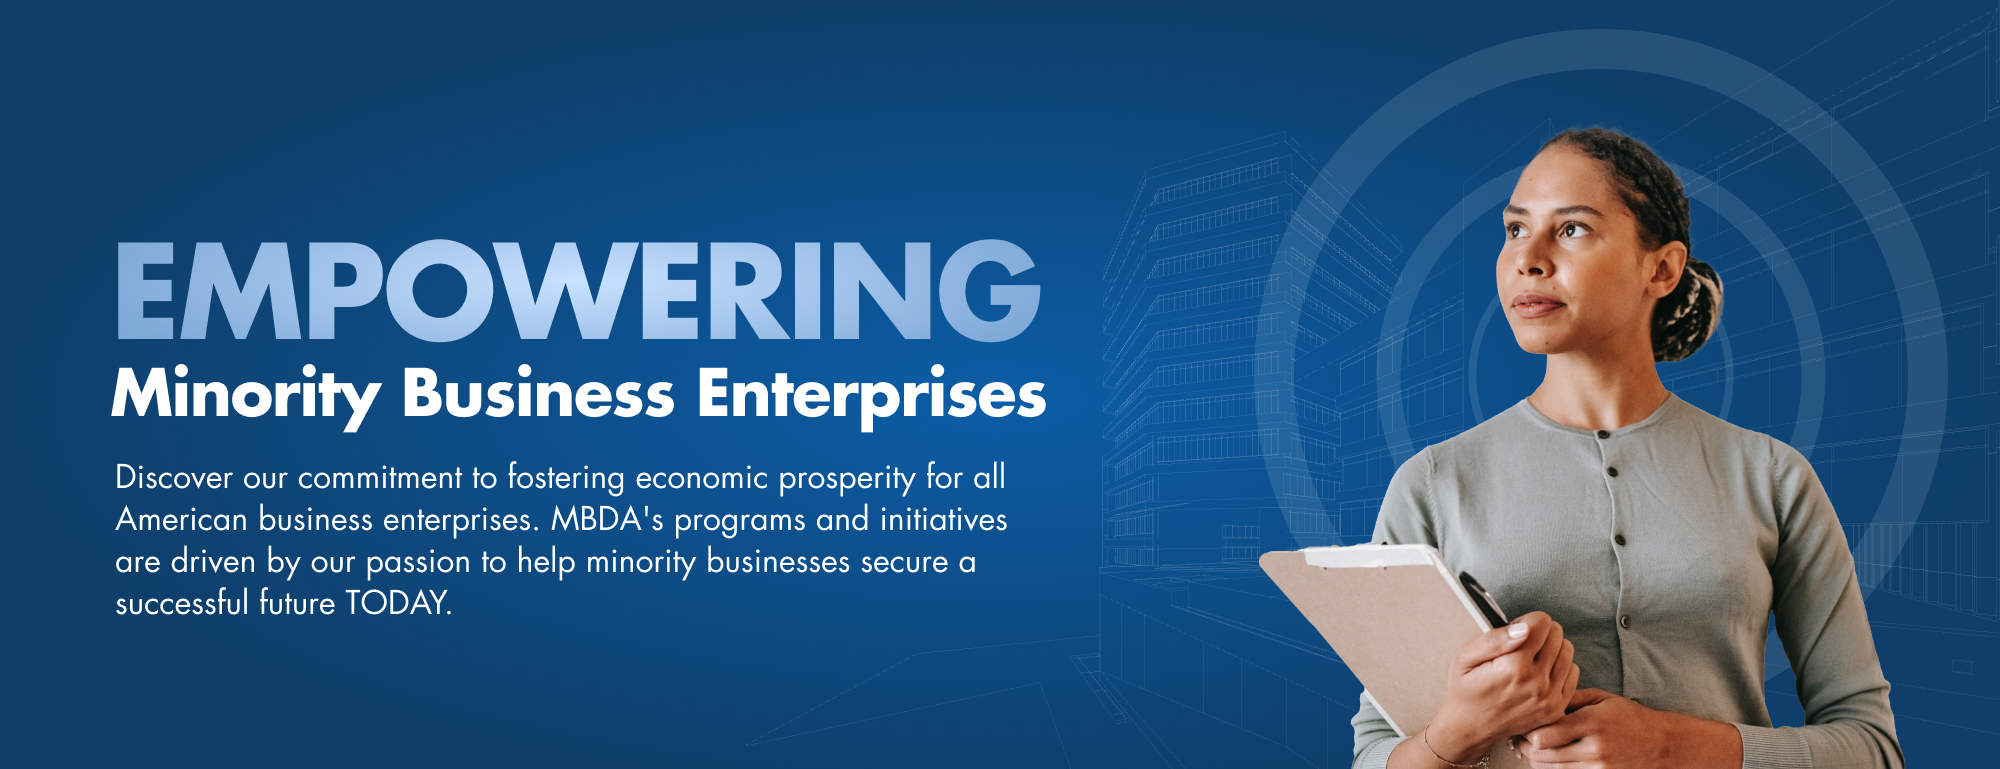 Empowering Minority Business Enterprises Marquee